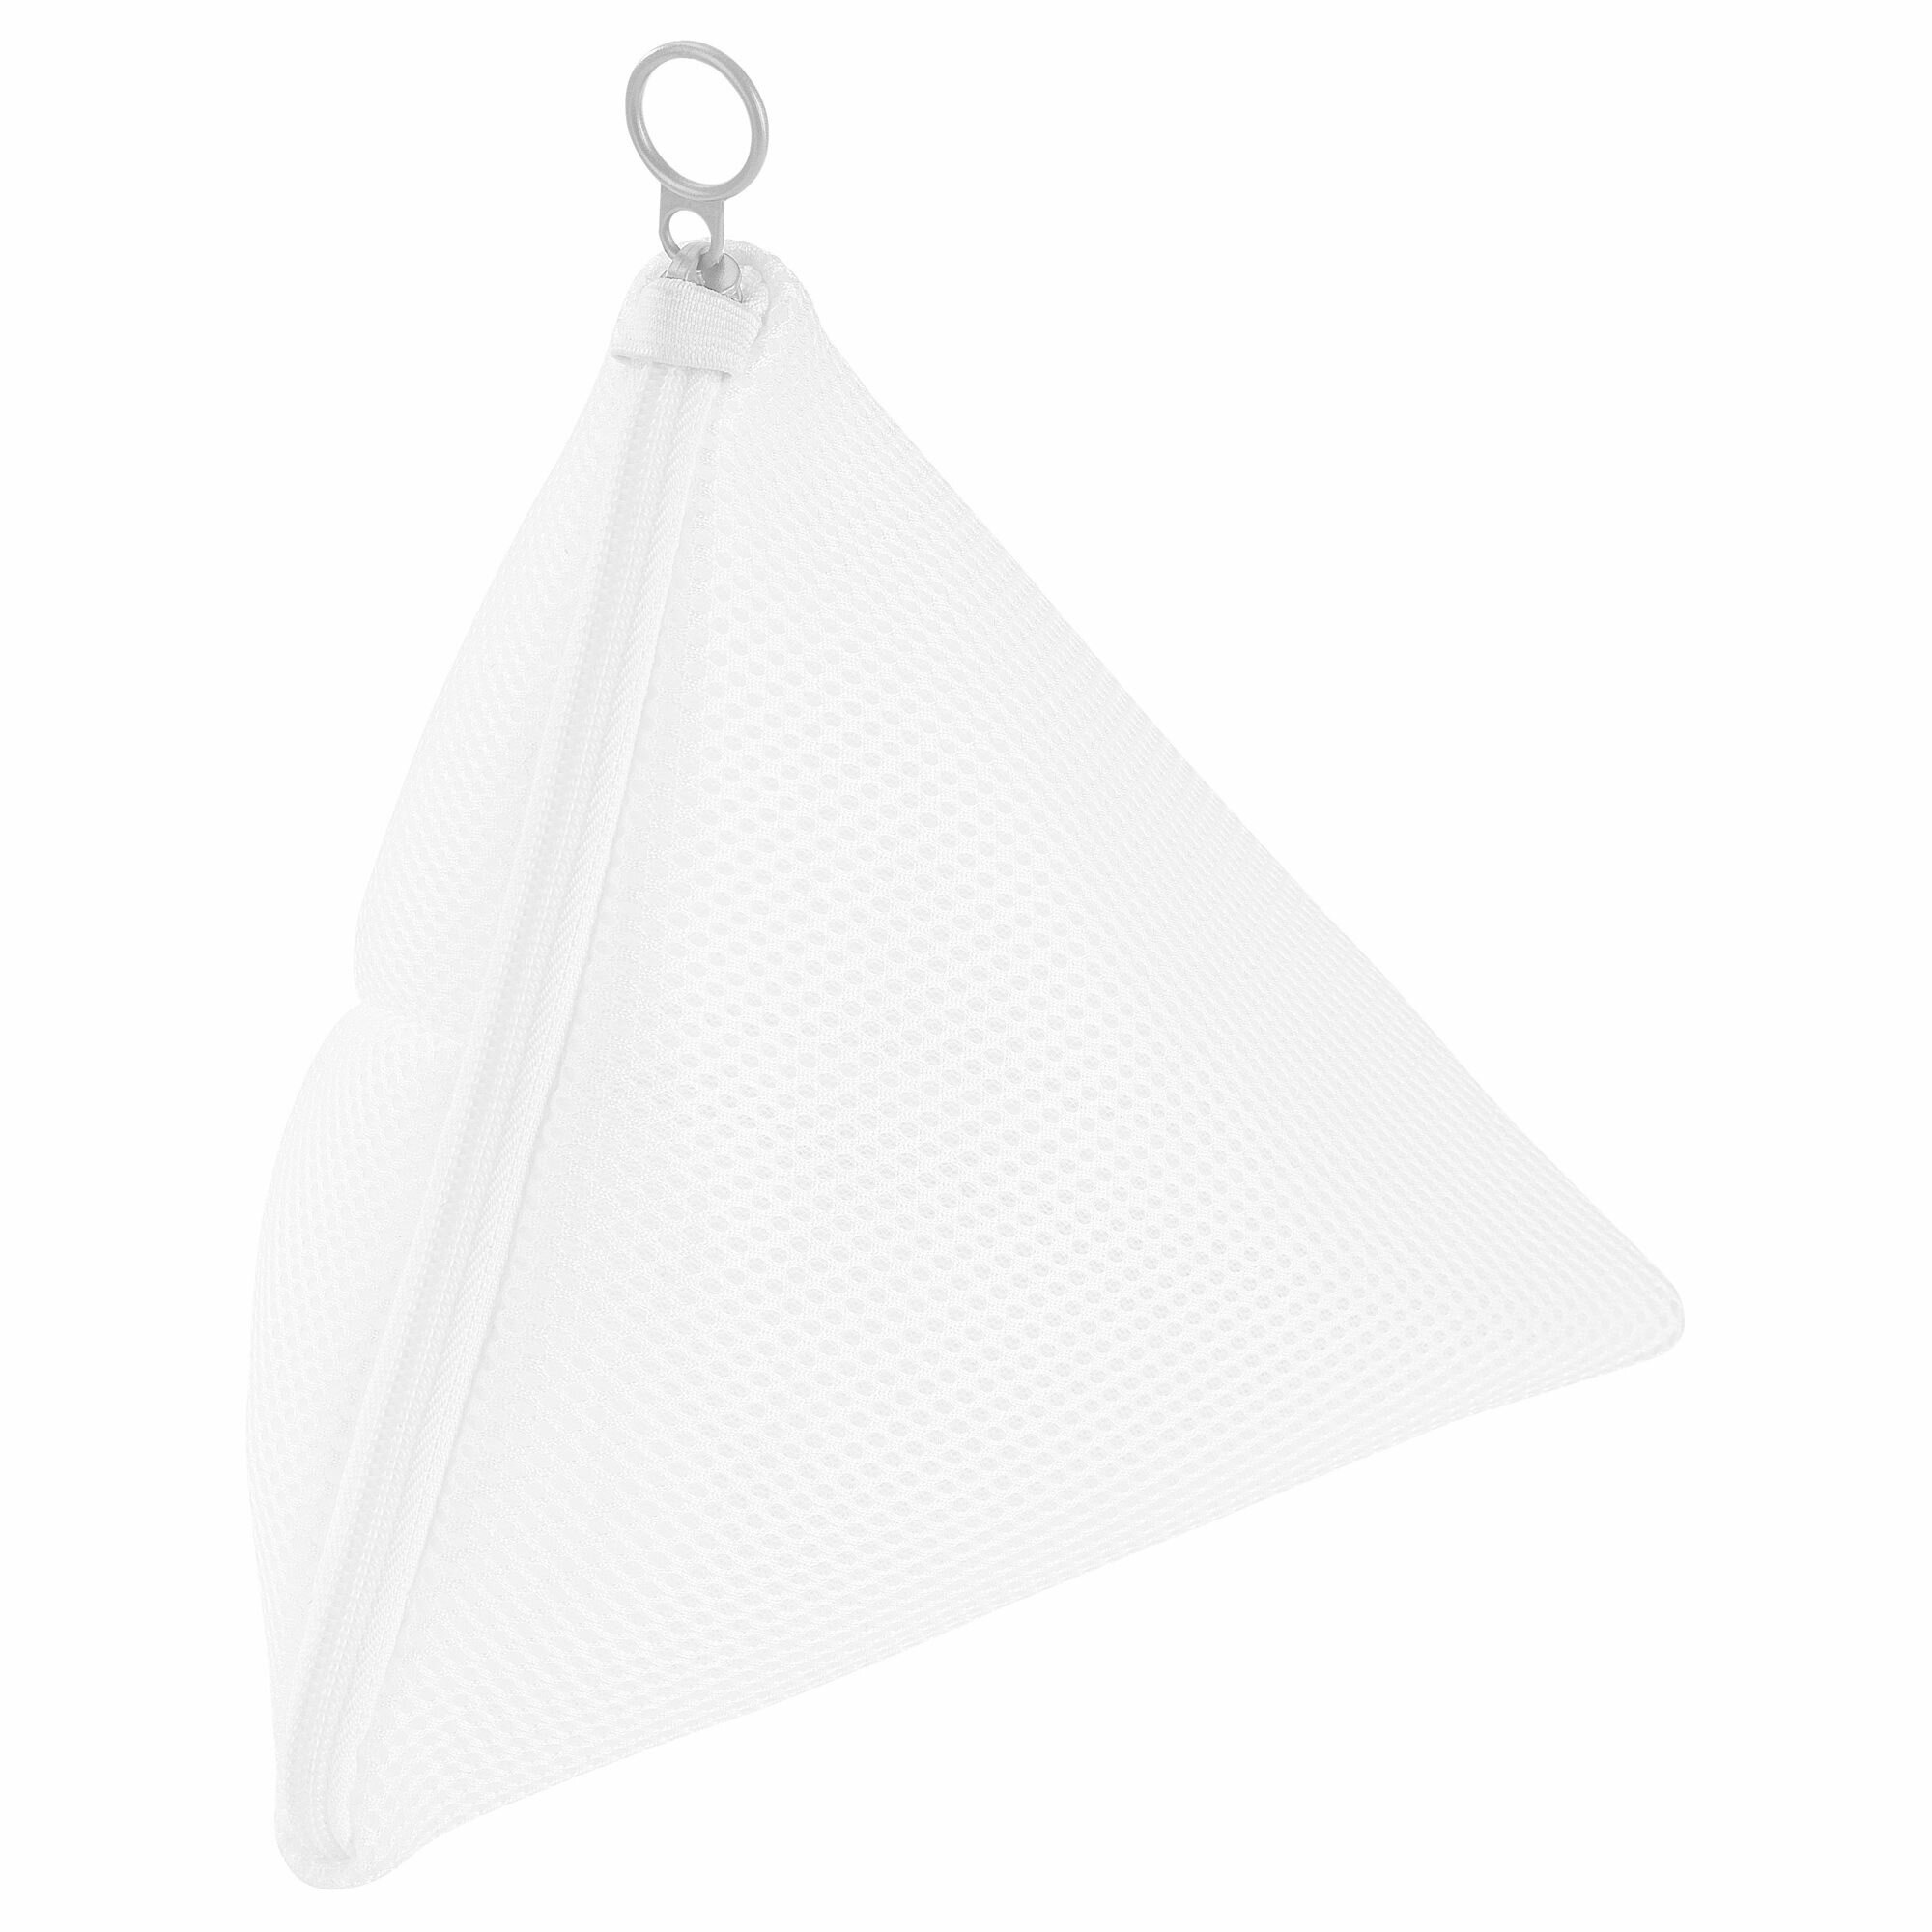 Икея / IKEA SLIBB слибб мешок для белья бело-серый 22x22x19 см